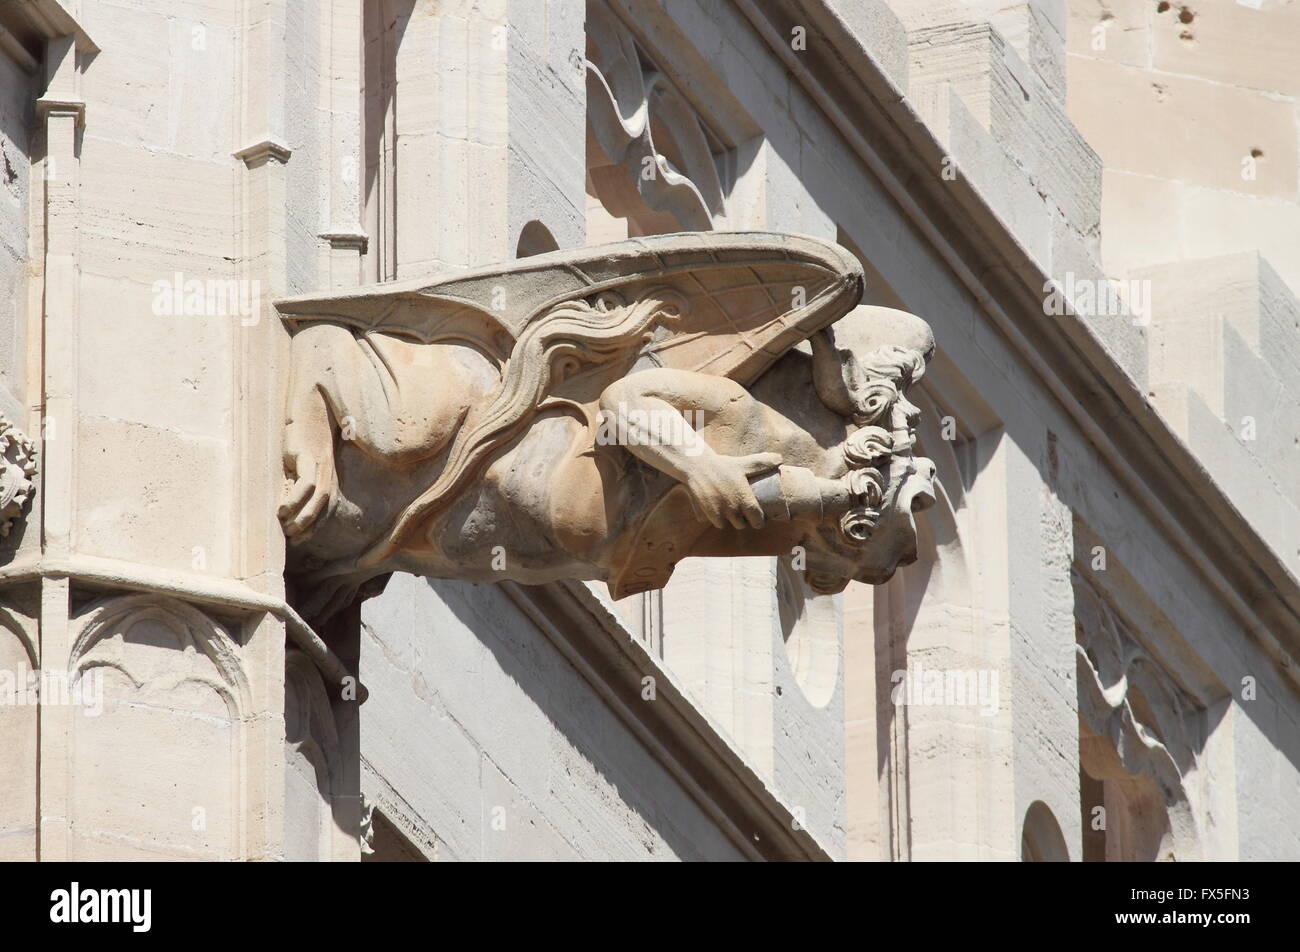 Gargoyle at La Lonja monument in Palma de Mallorca, Spain Stock Photo